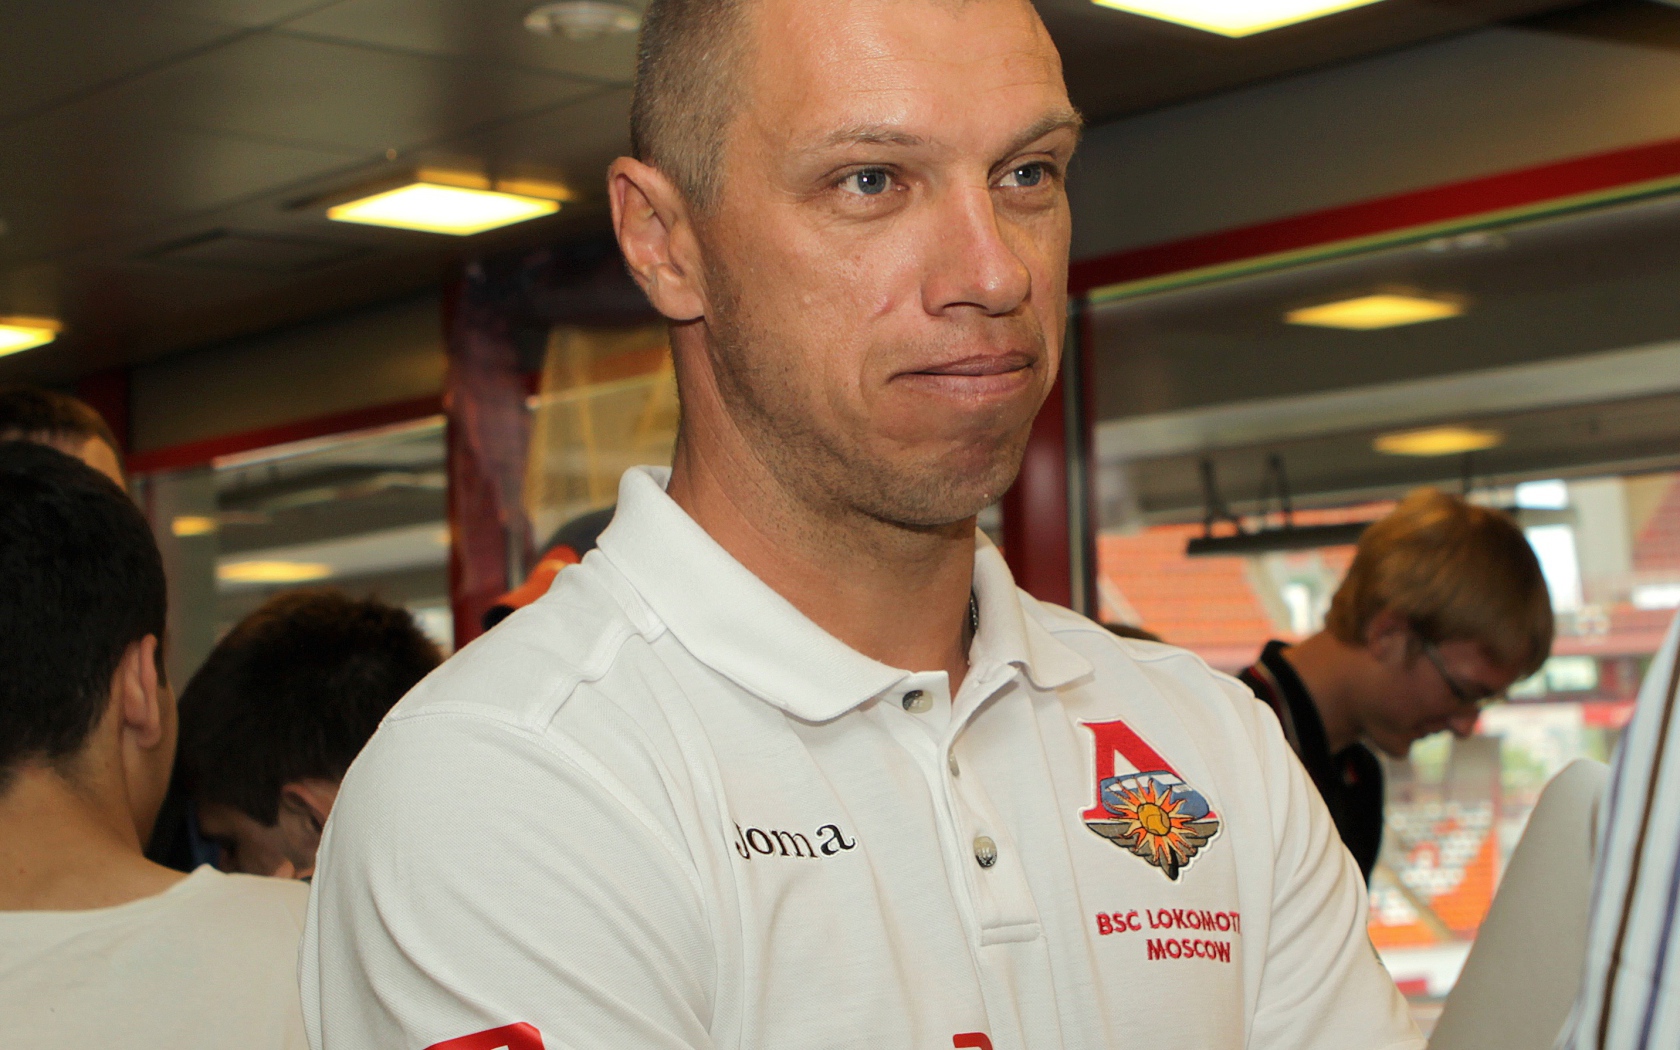 Lokomotiv player Alexander Filimonov